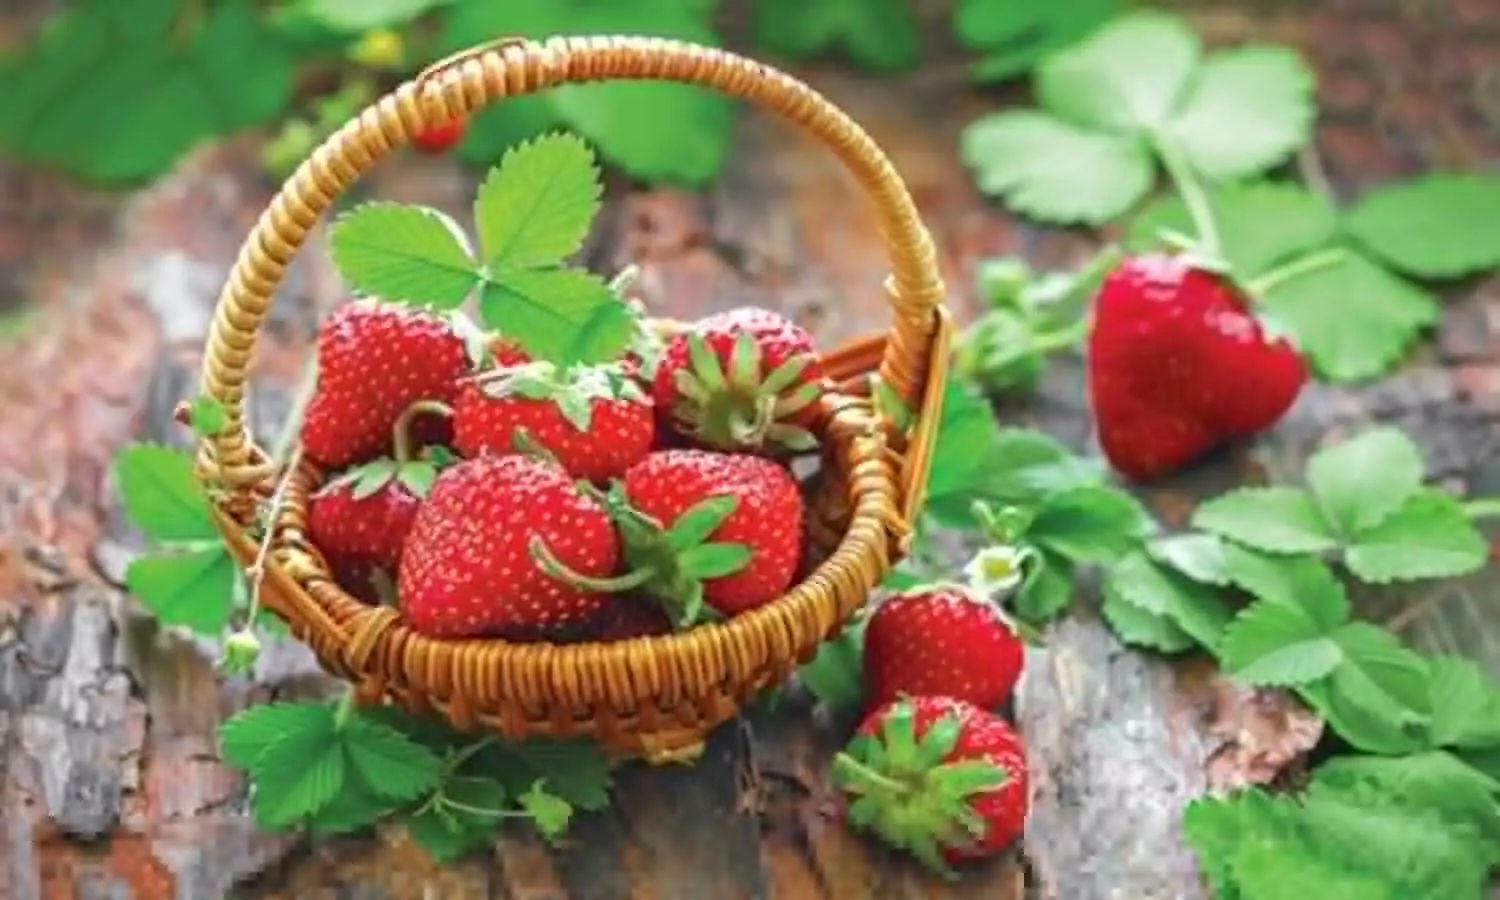 Strawberry advantage